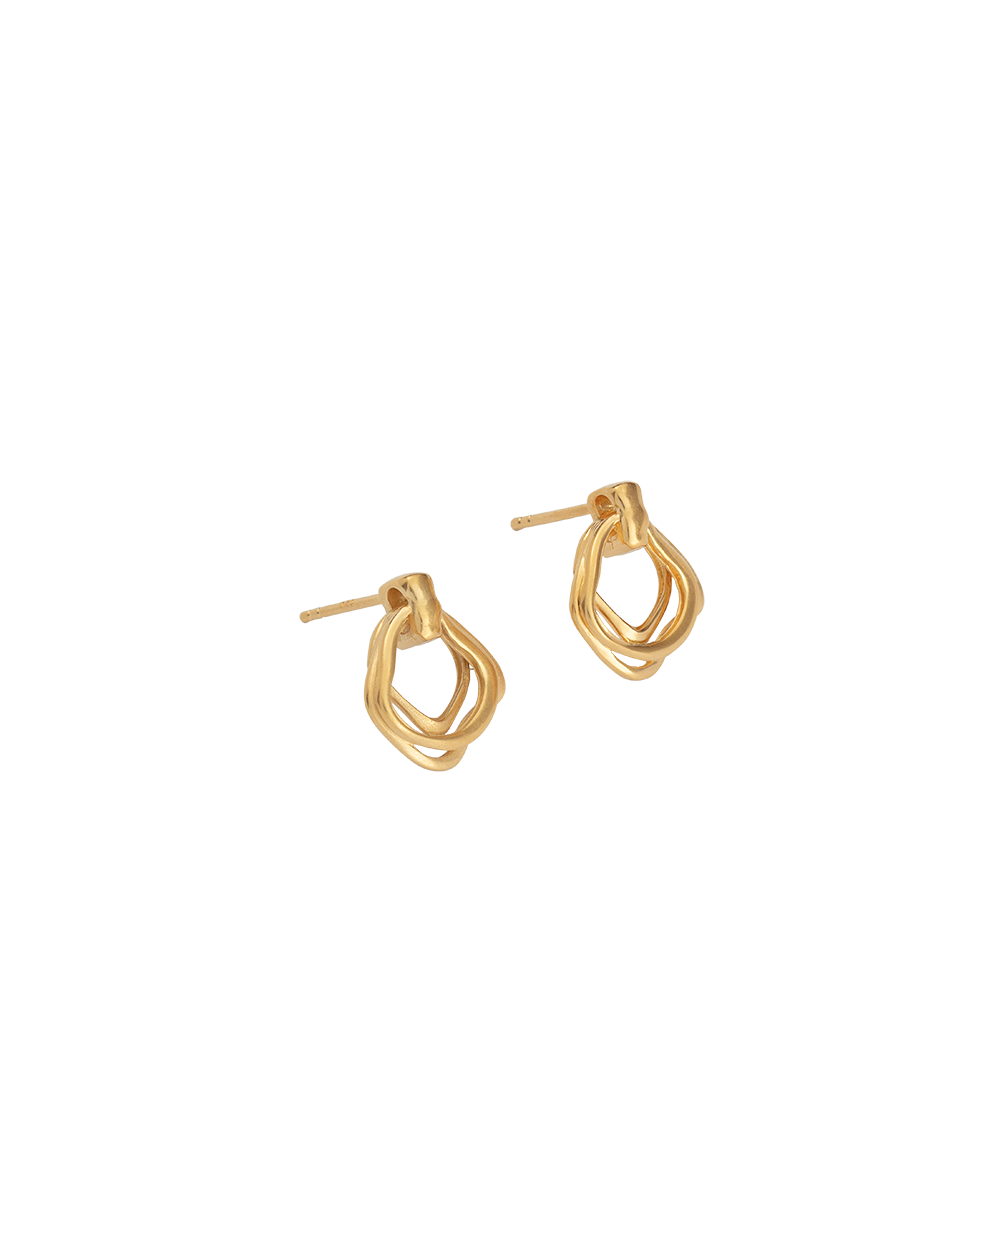 BOTANICA EARRINGS (18K GOLD PLATED) - IMAGE 4